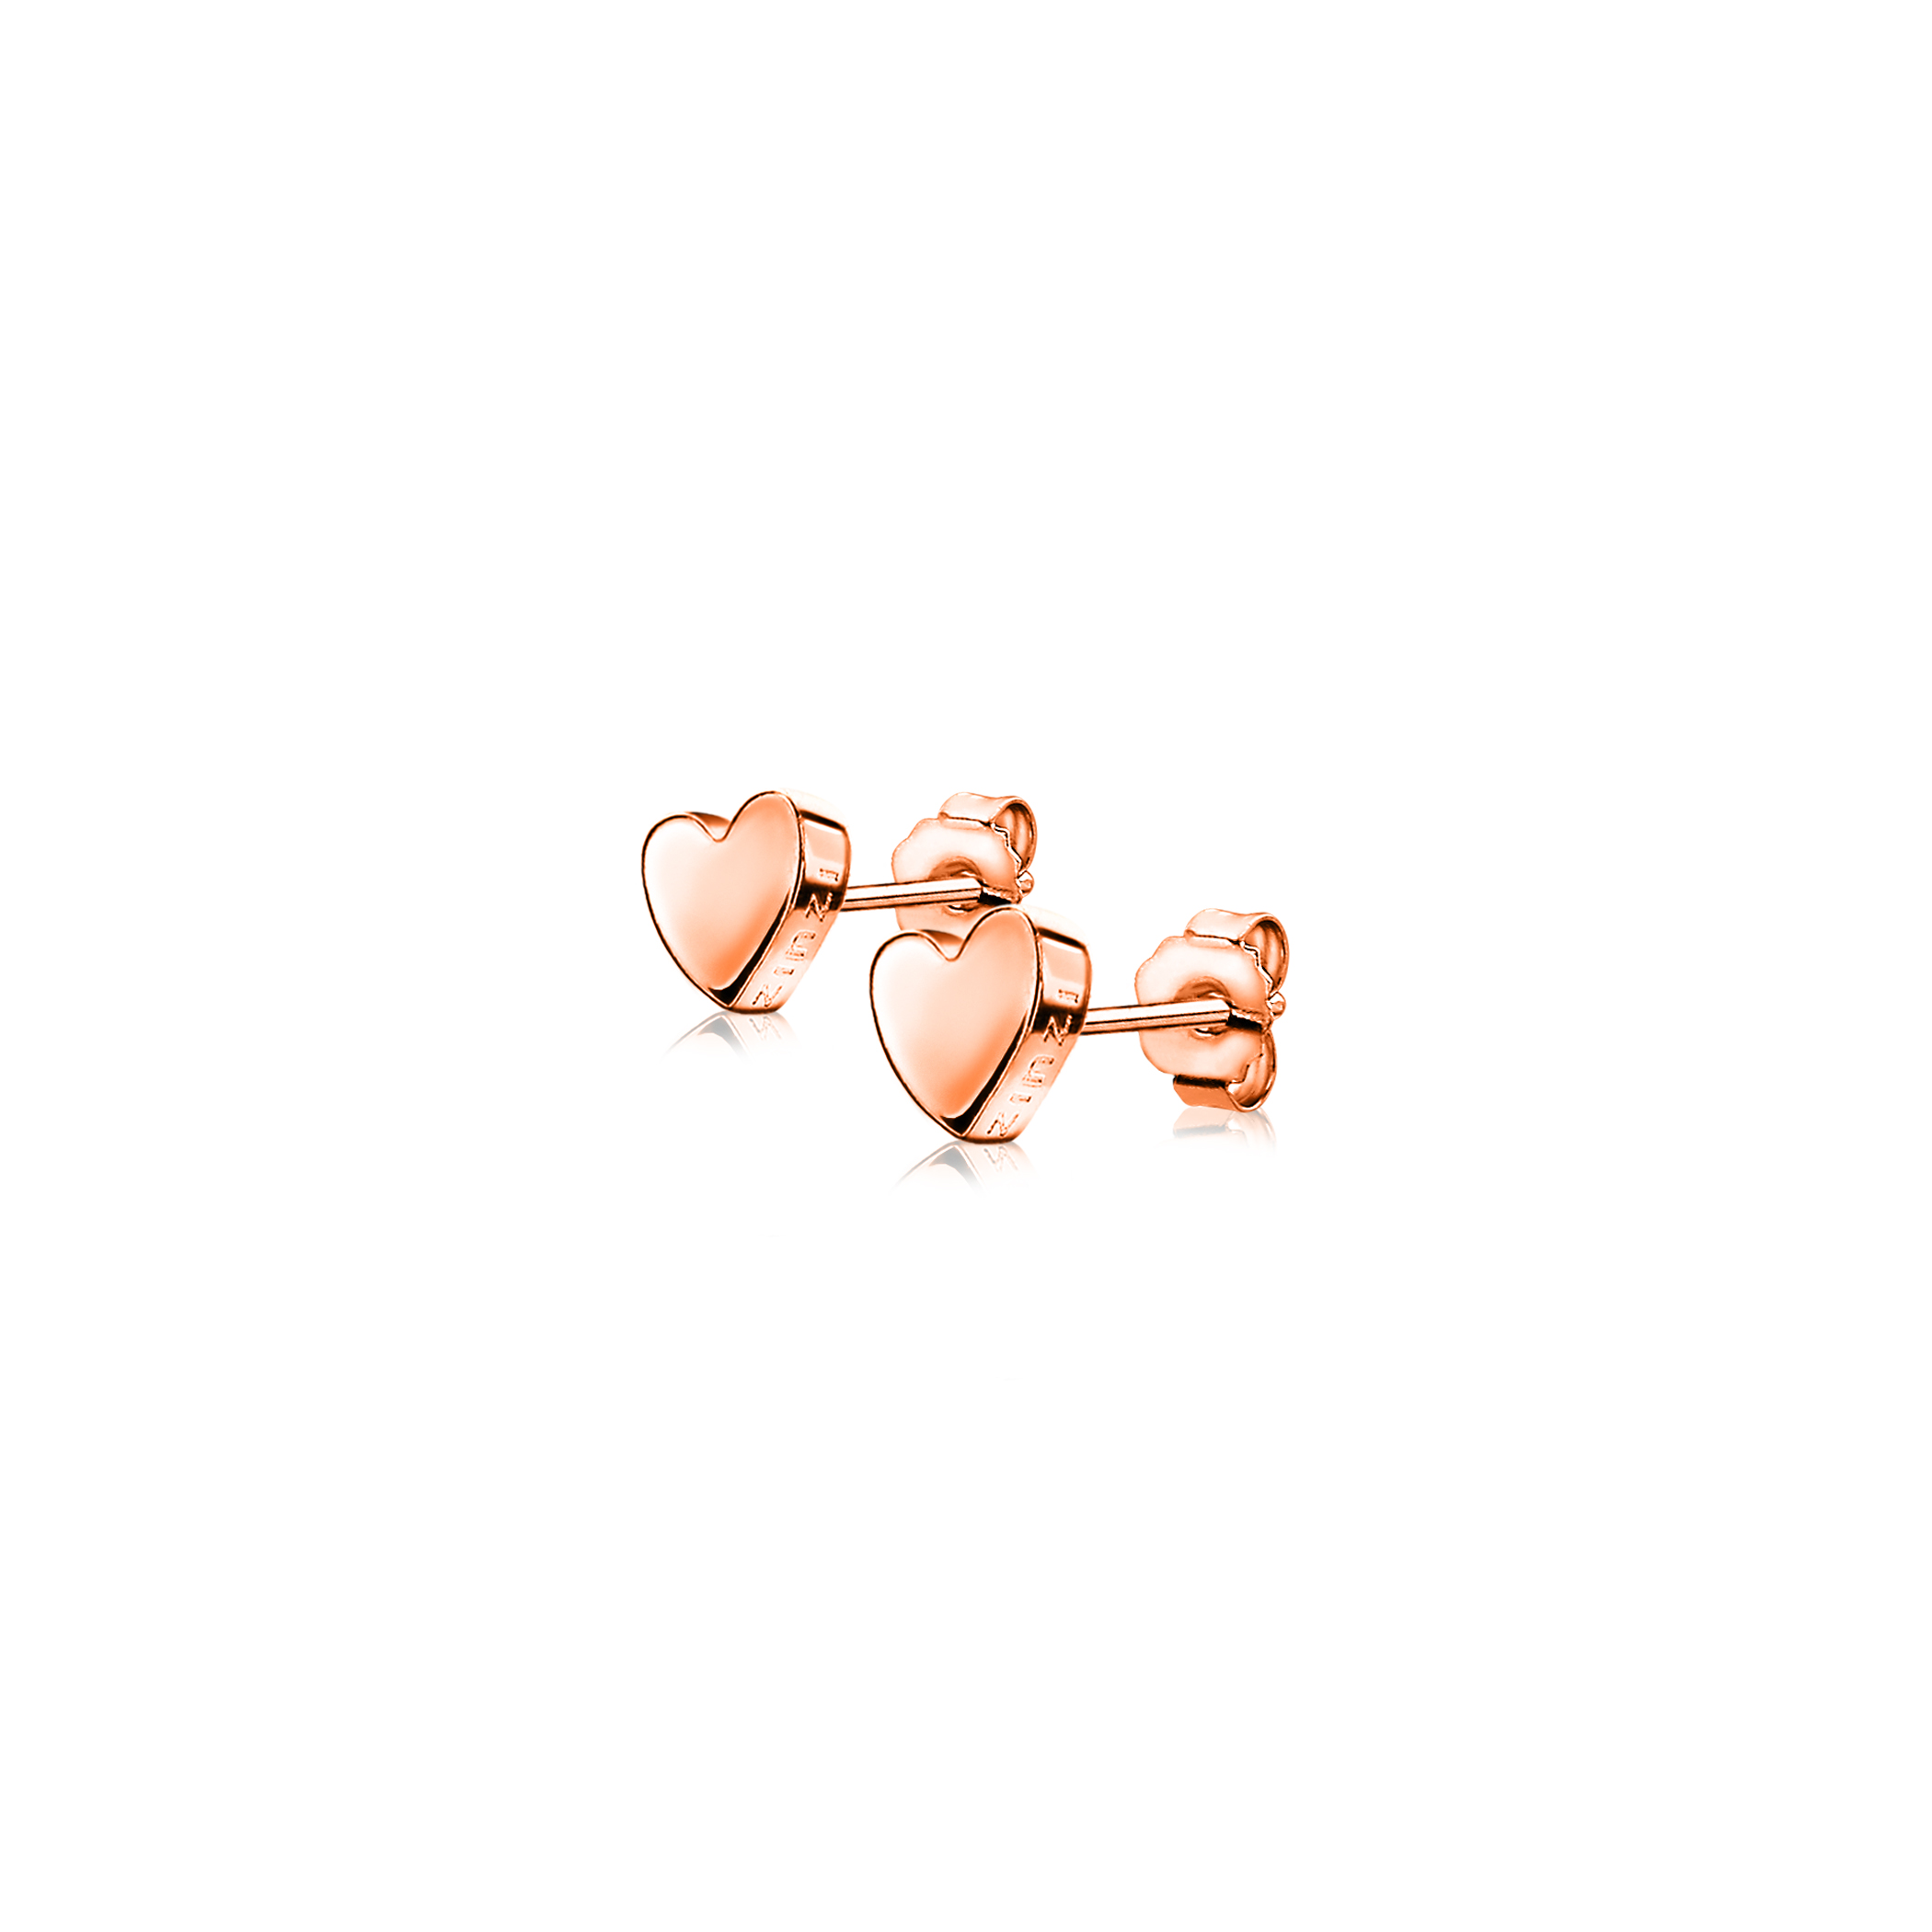 6mm ZINZI Rose Gold Plated Sterling Silver Stud Earrings Heart ZIO1378R